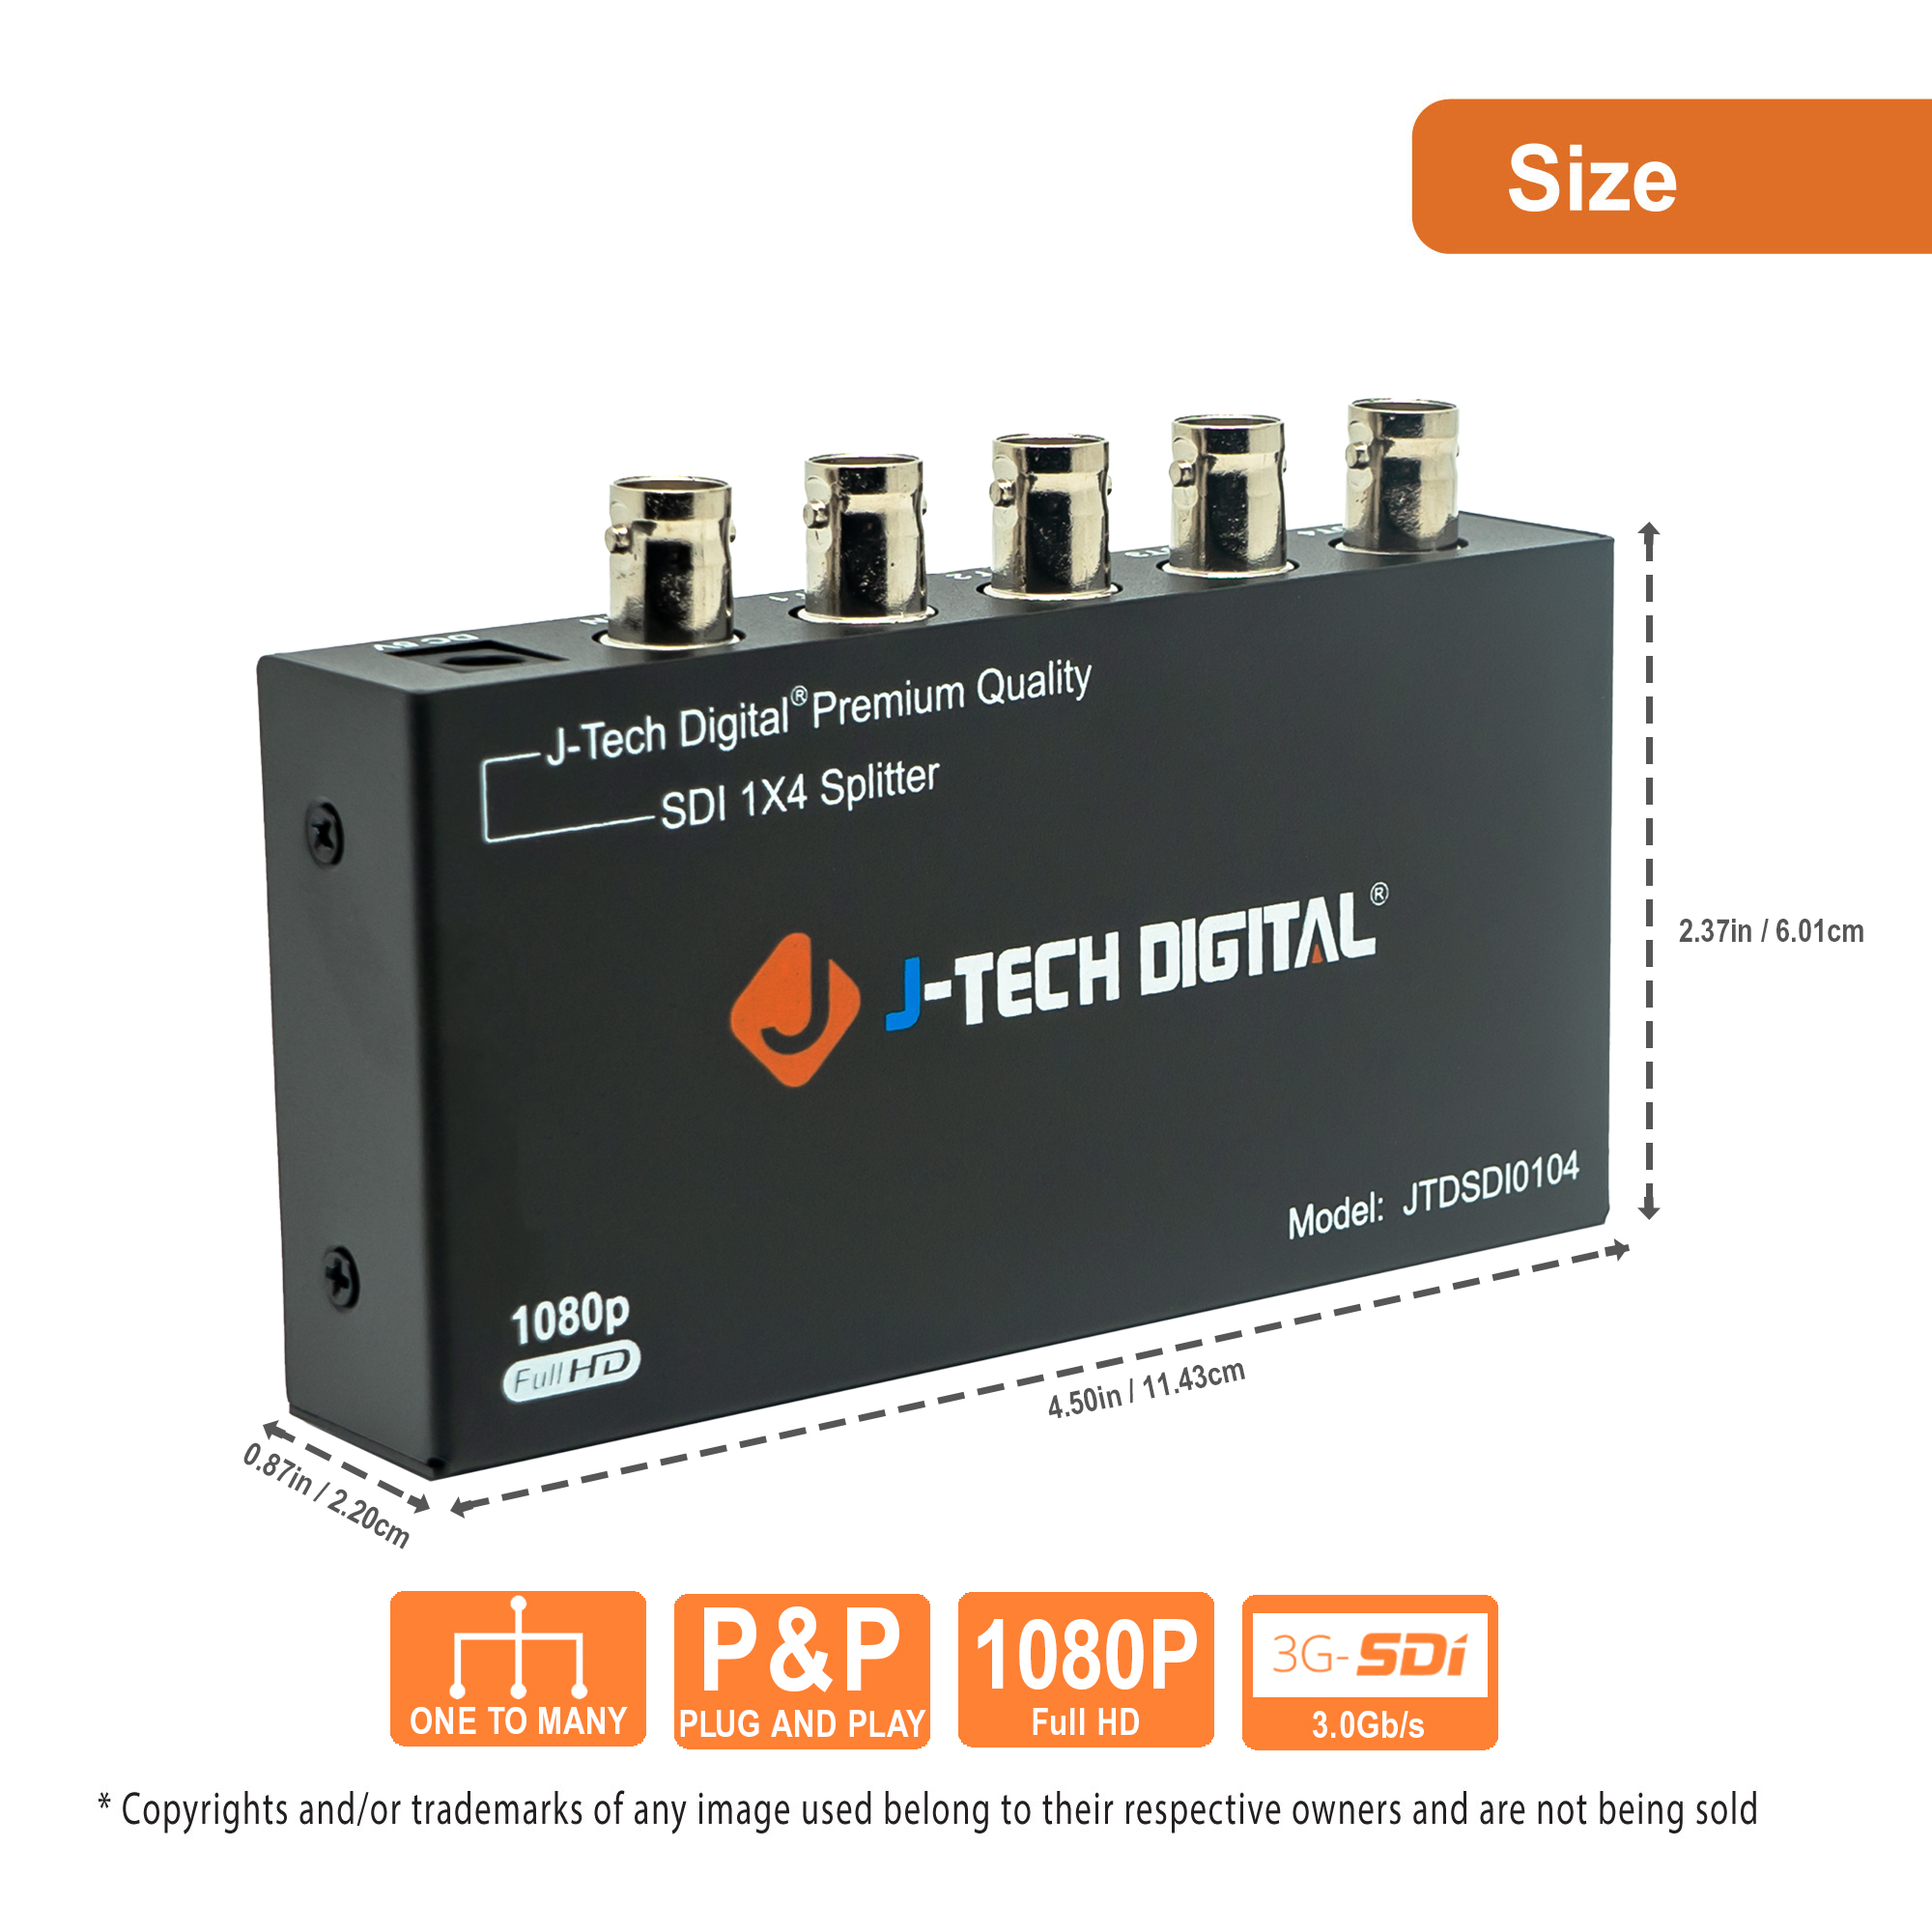 SDI Splitter 1x4 Supports SD-SDI, HD-SDI, 3G-SDI up to 1320 Ft